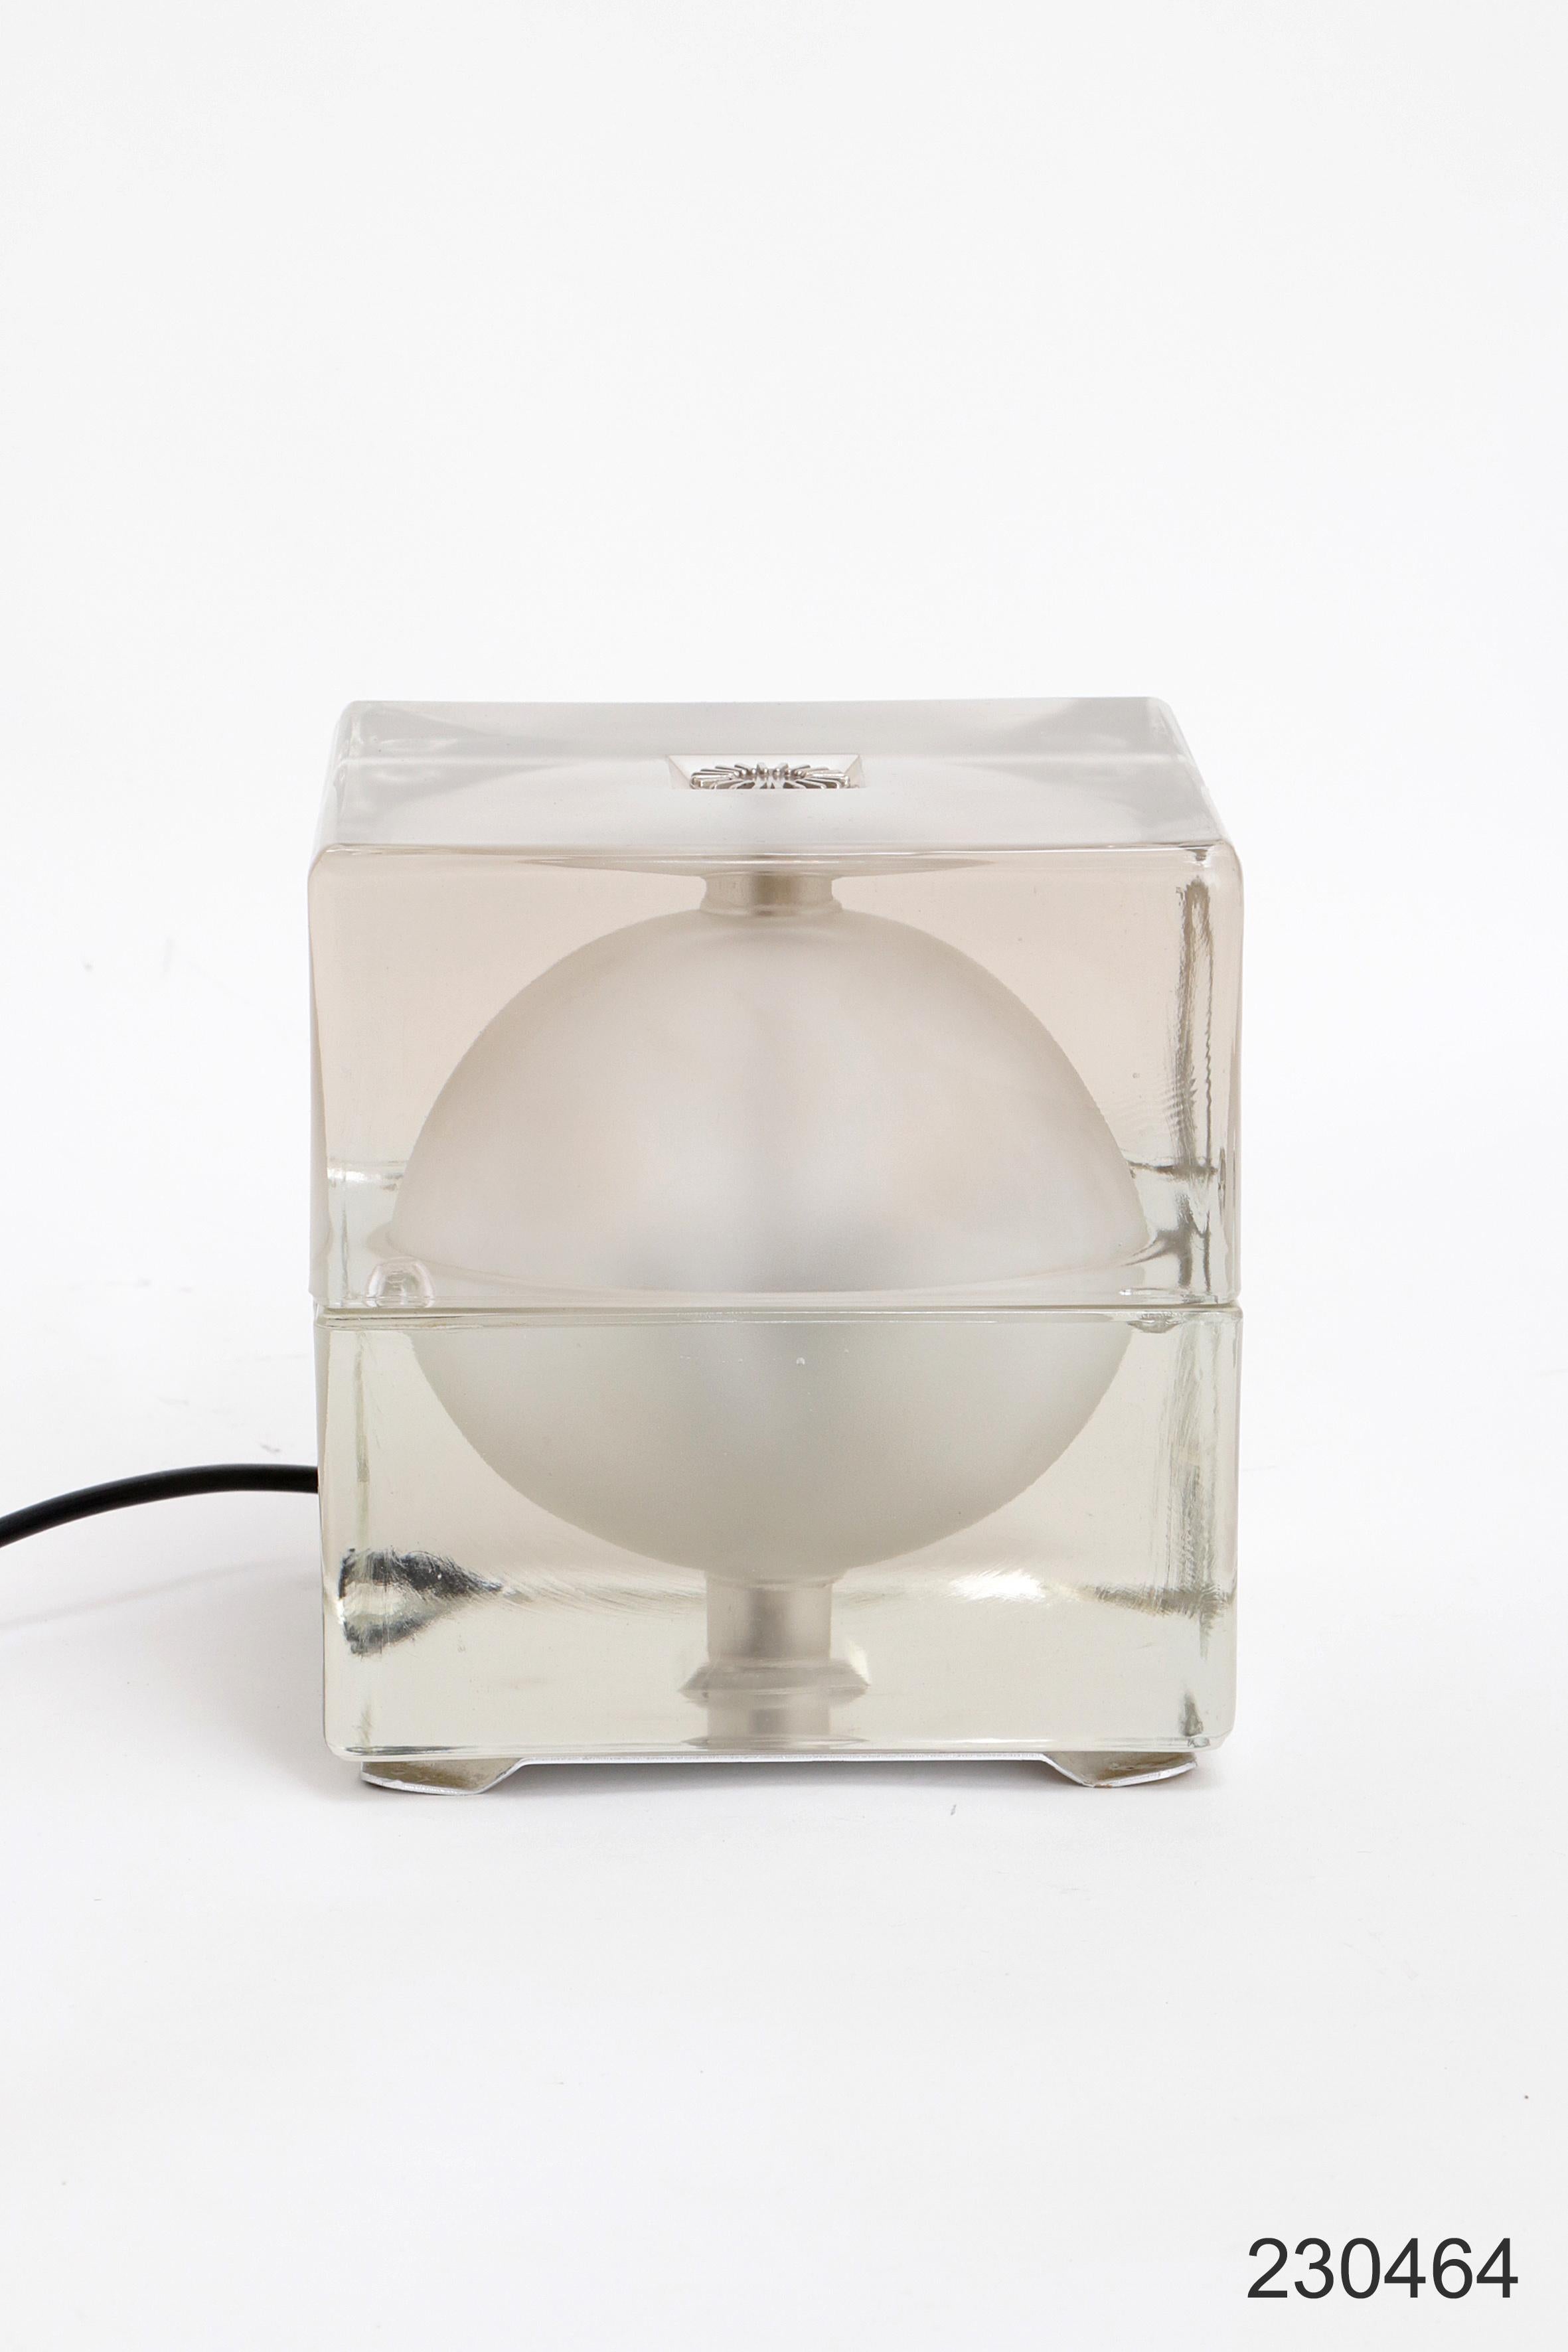 Alessandro Mendini “Cubosfera” Table Lamp Metal Crome Glass 1968 Italy 6